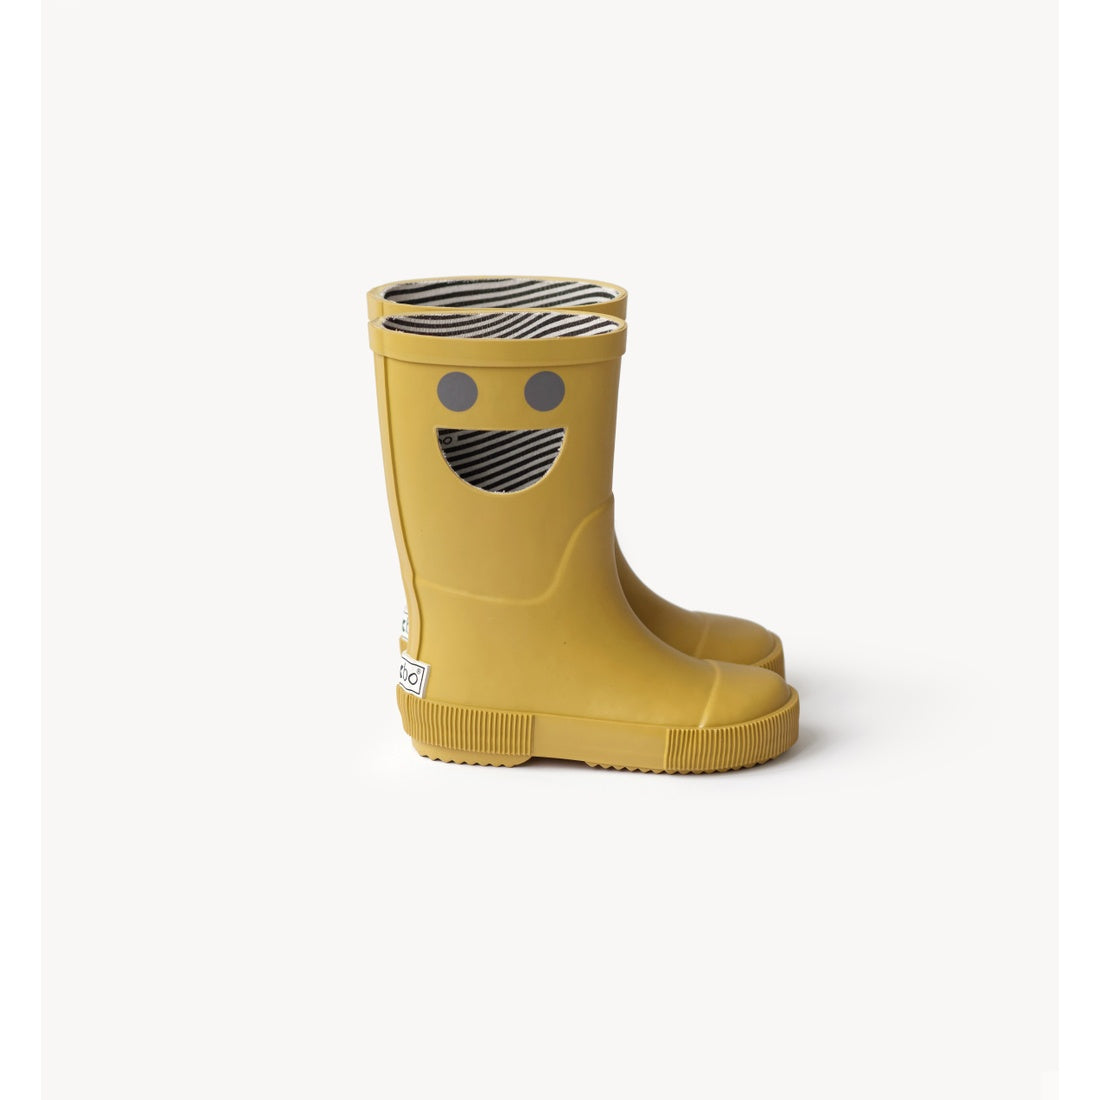 BOXBO Wistiti Mustard Rain Boots Gumboots